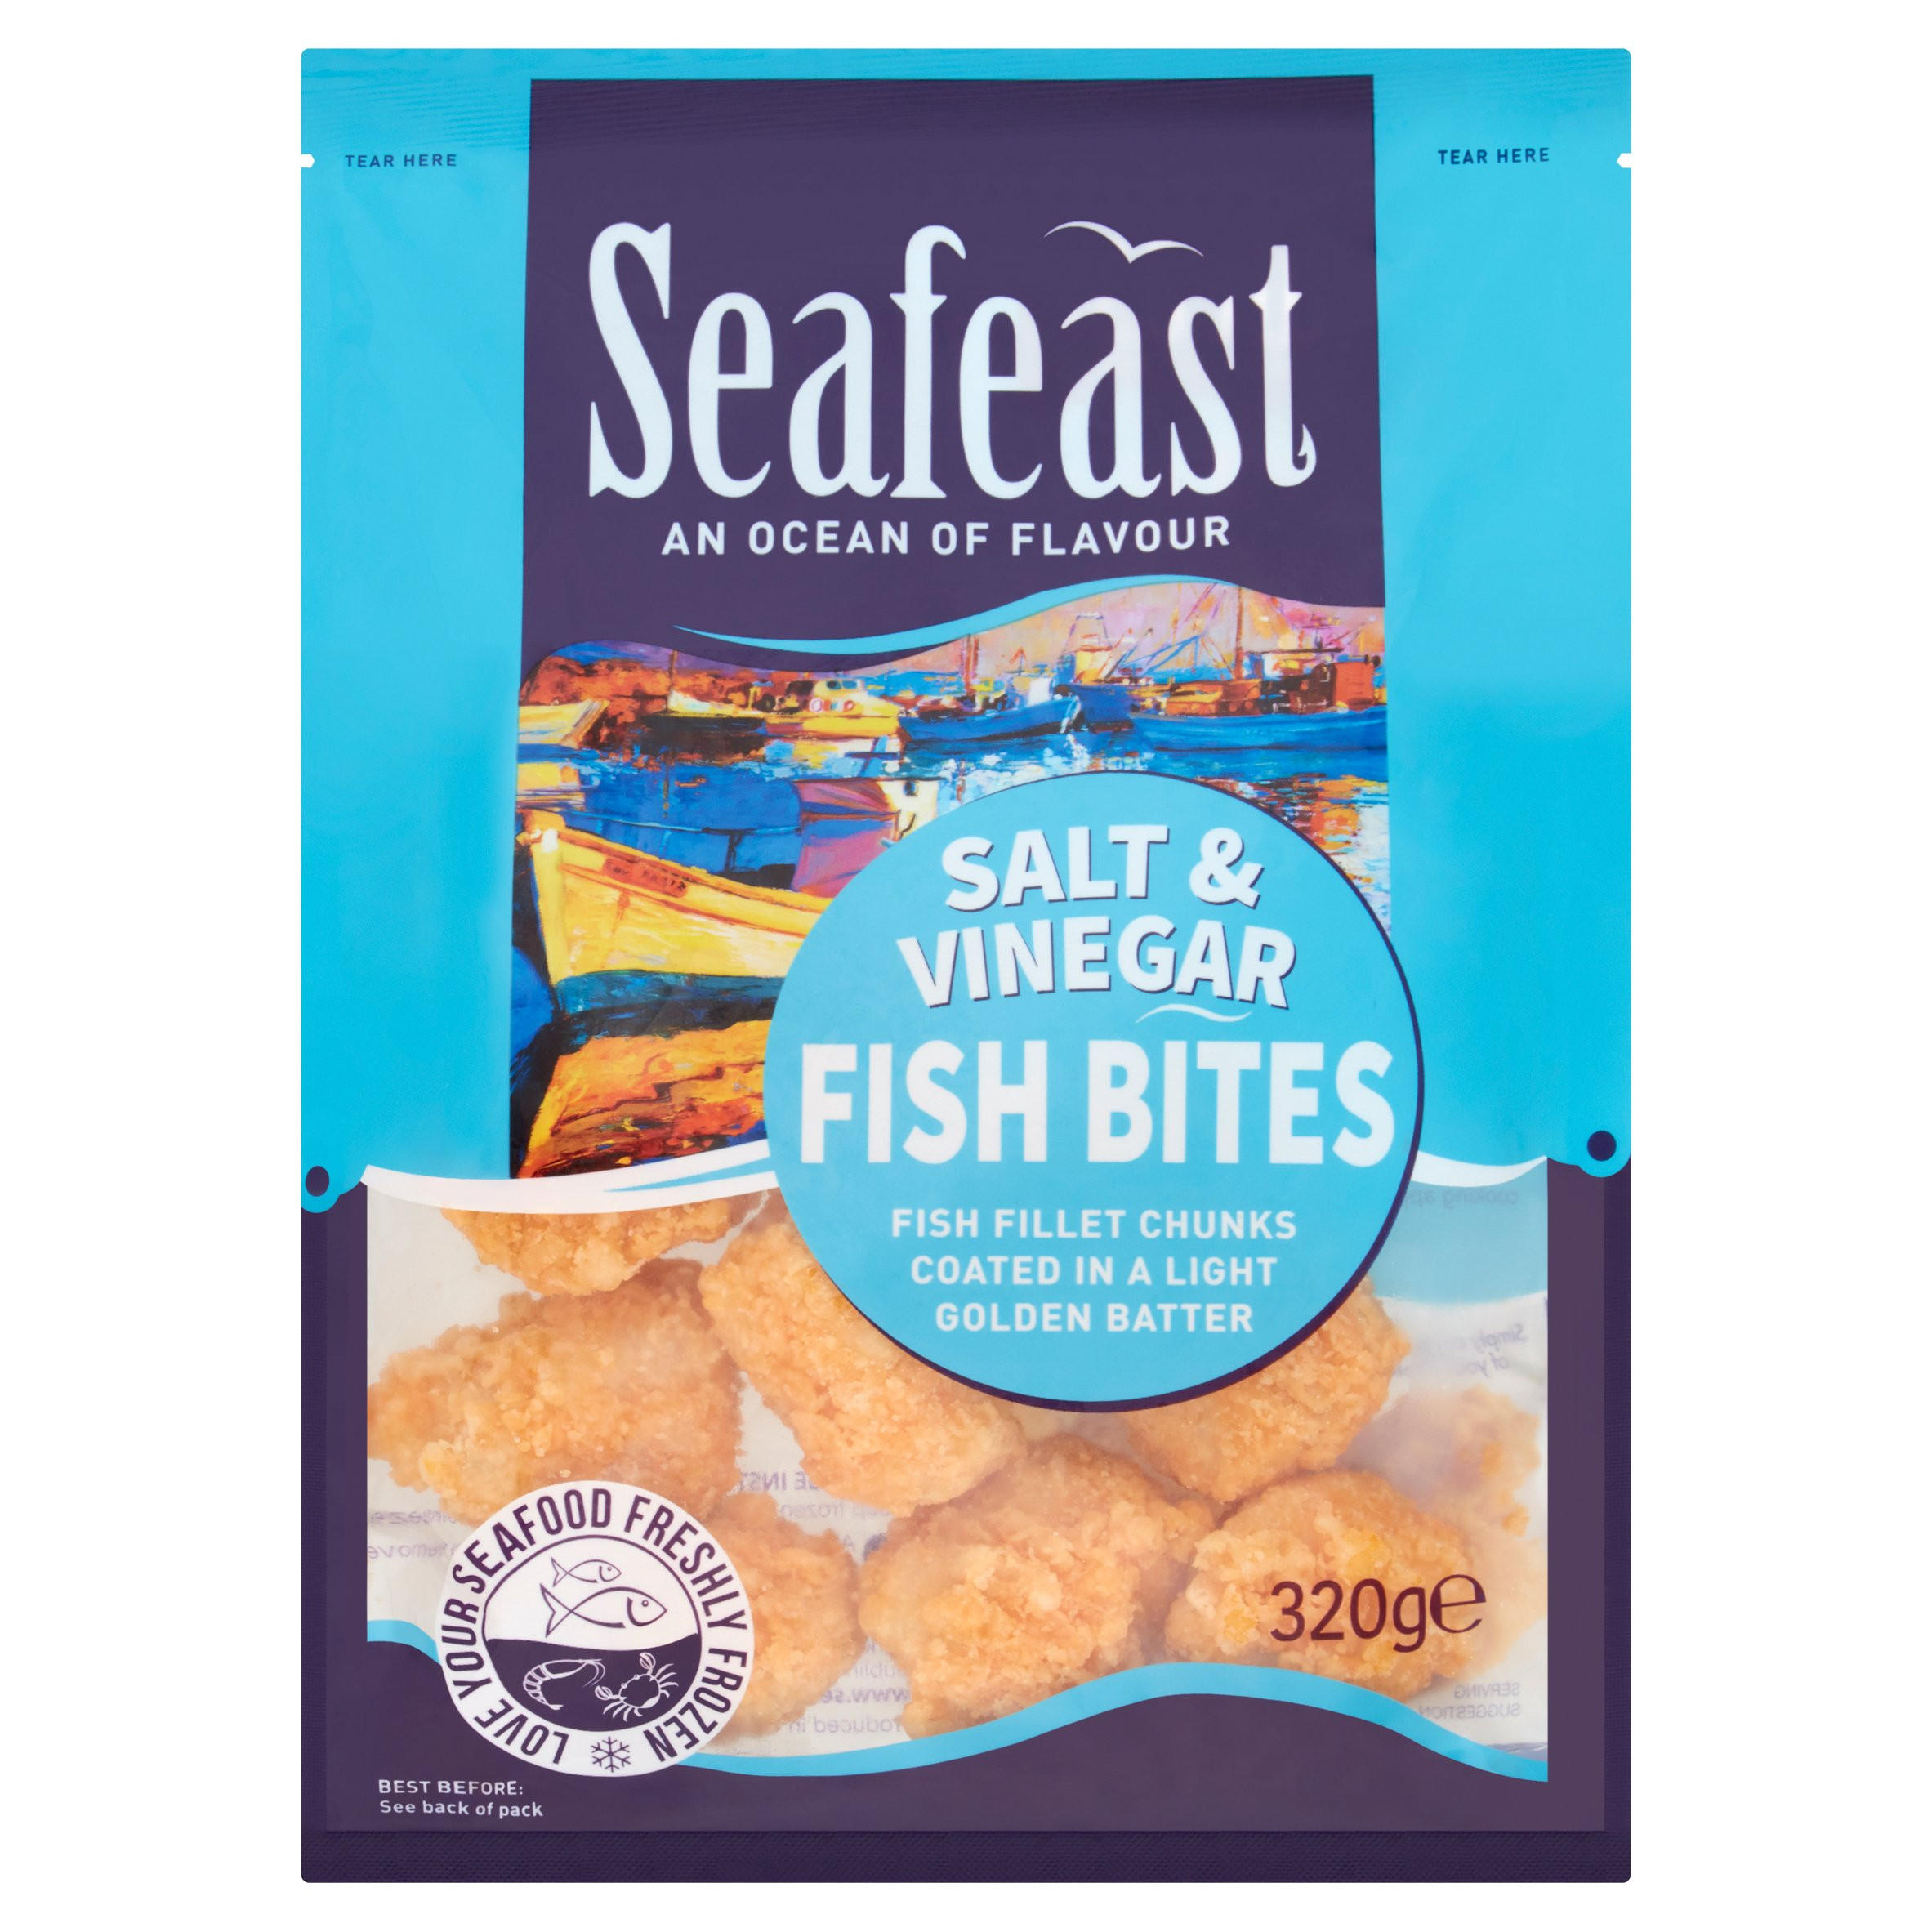 Seafeast Salt & Vinegar Fish Bites 320g, Battered & Breaded Fish